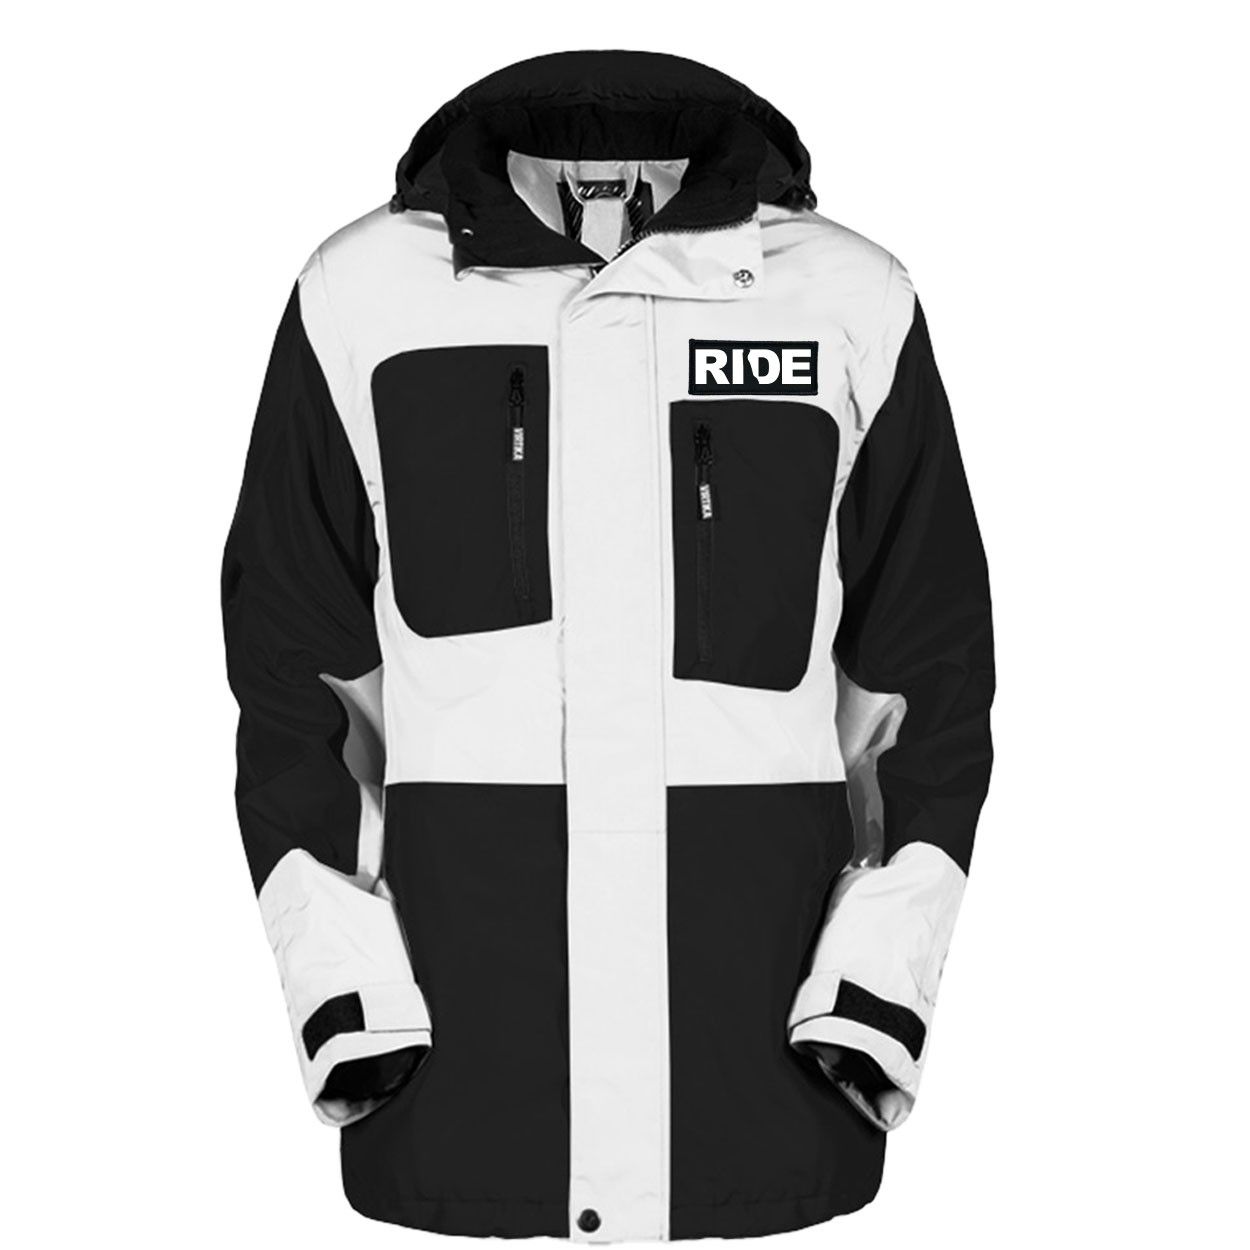 Ride Delaware Classic Woven Patch Pro Snowboard Jacket (Black/White)